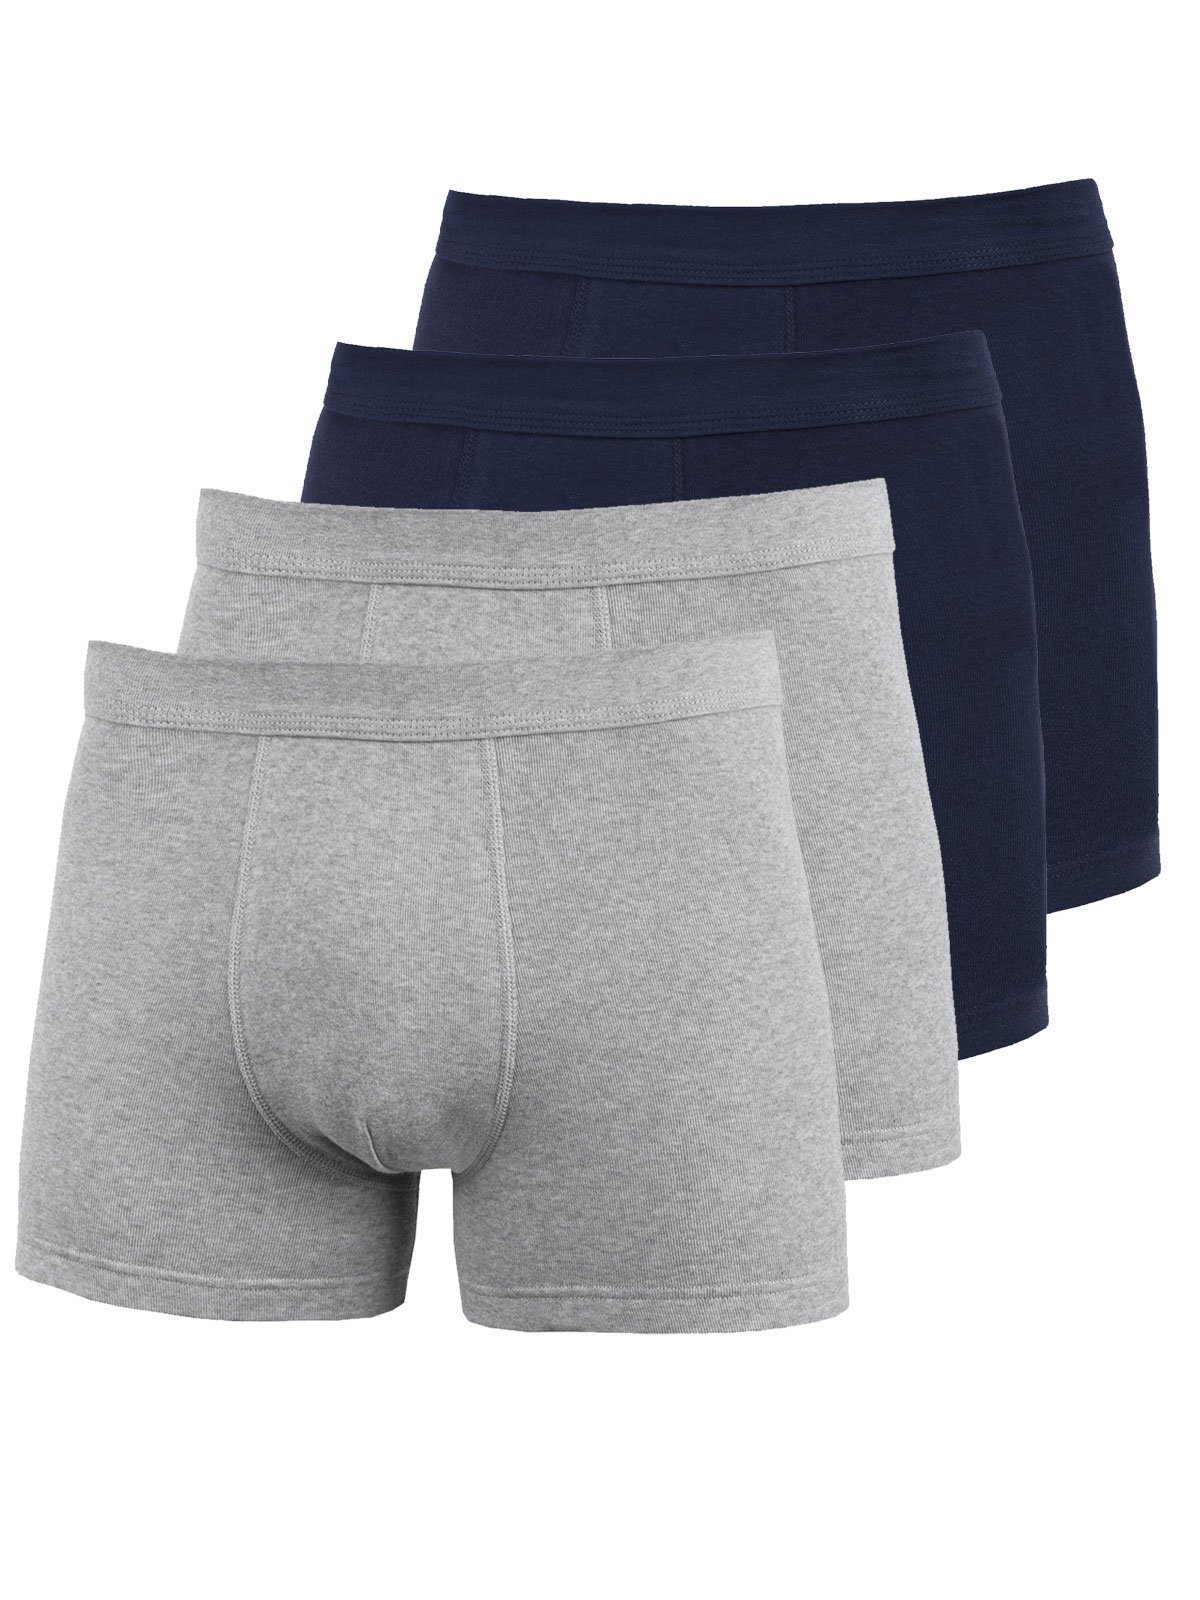 KUMPF Retro Pants 4er Sparpack Herren Pants Bio Cotton (Spar-Set, 4-St) - steingrau-melange navy